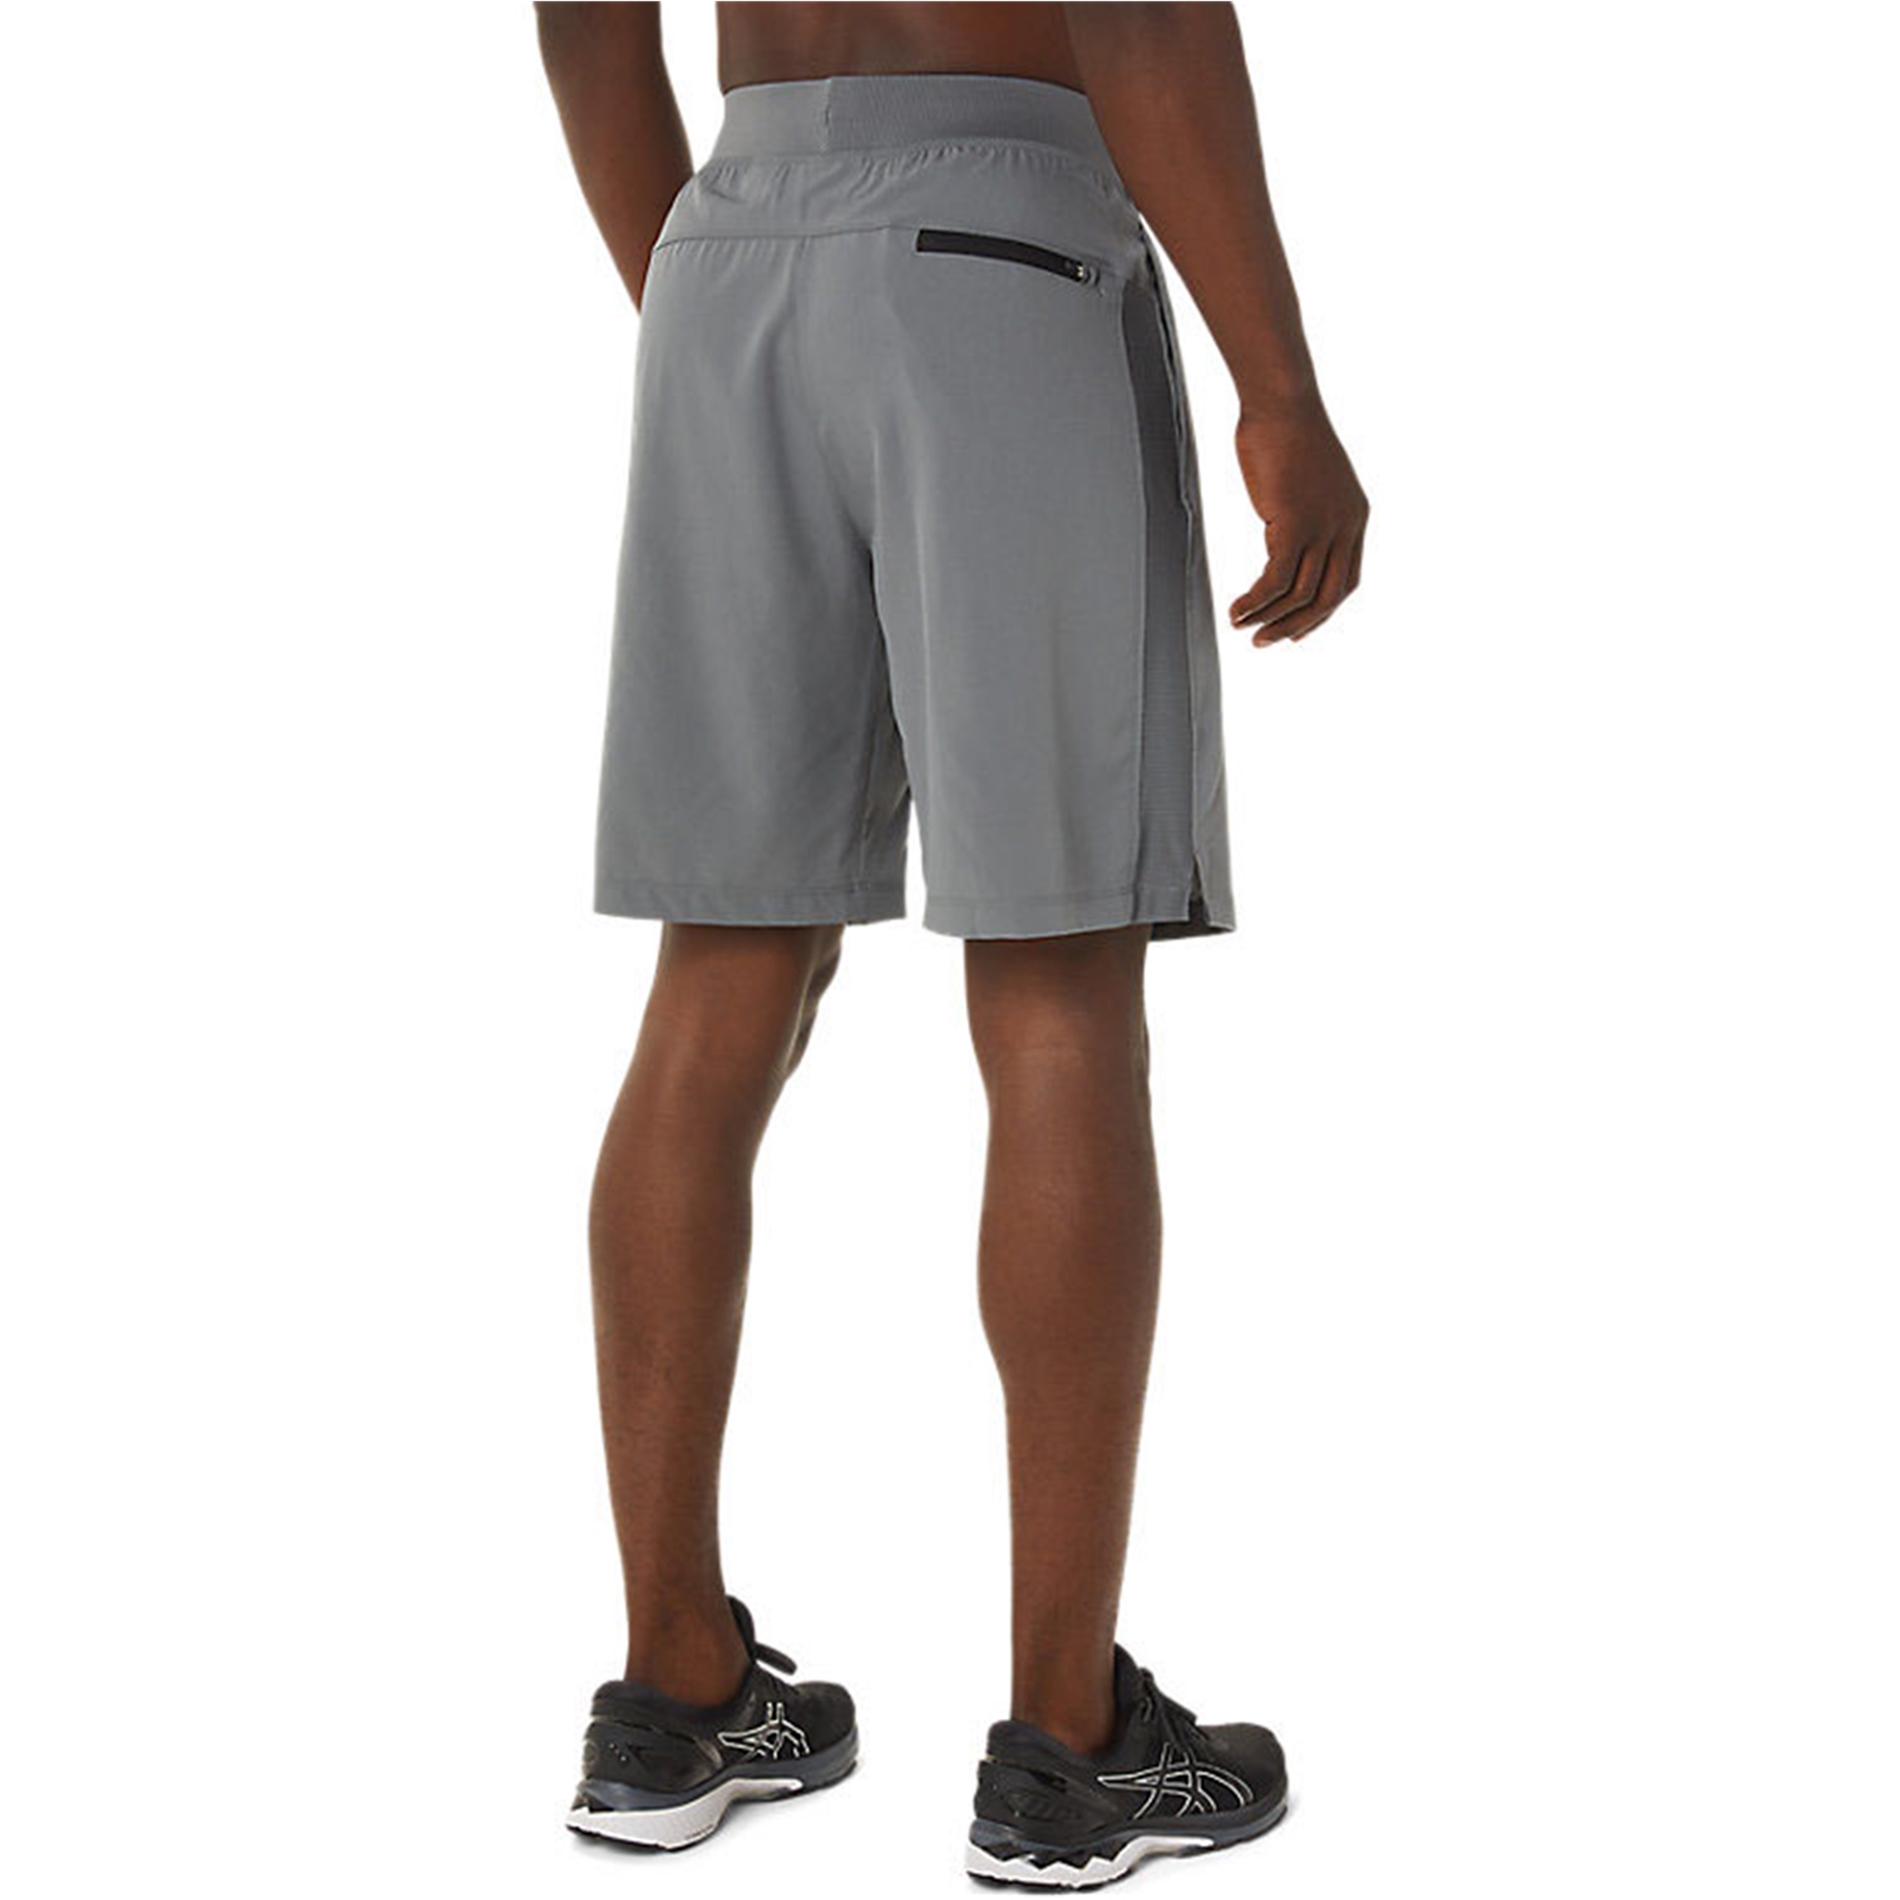 Asics Mens Mixer Athletic Workout Shorts